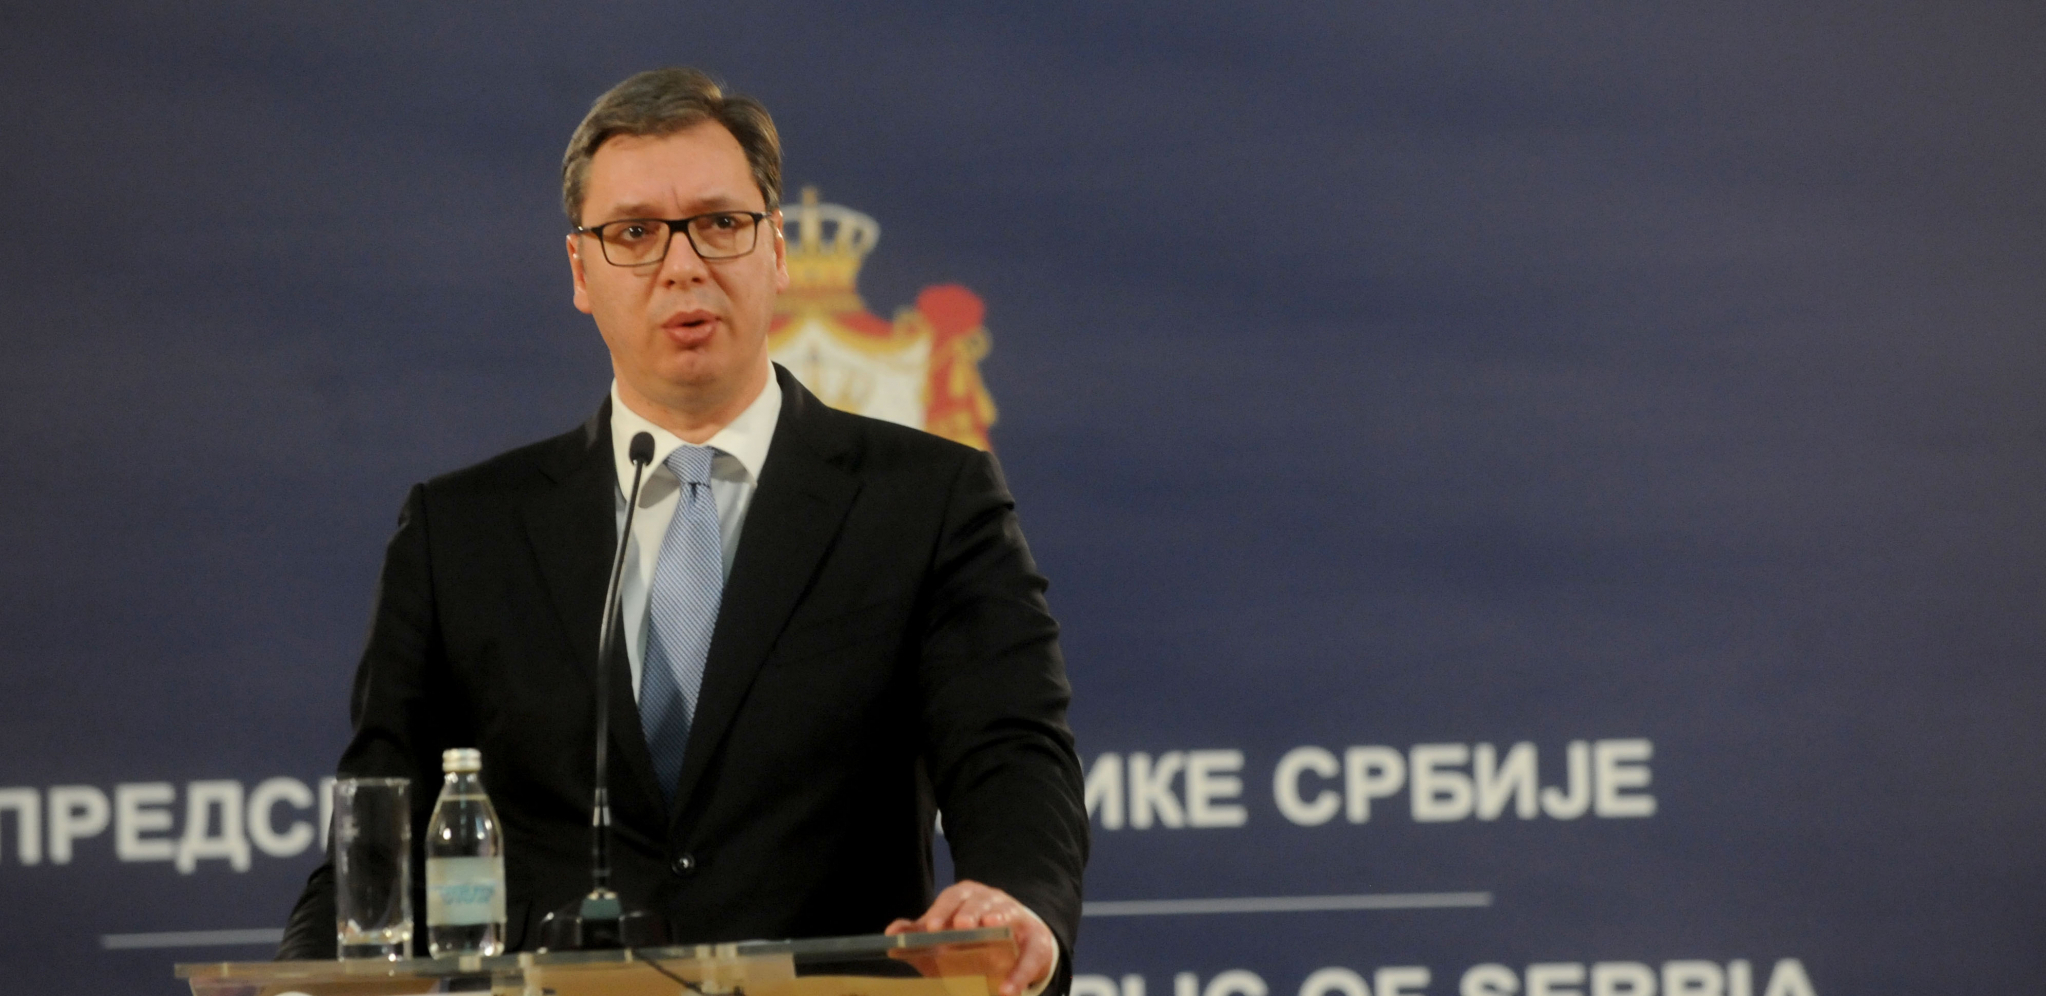 Vučić danas razgovara sa izvestiocem EP Vladimirom Bilčikom